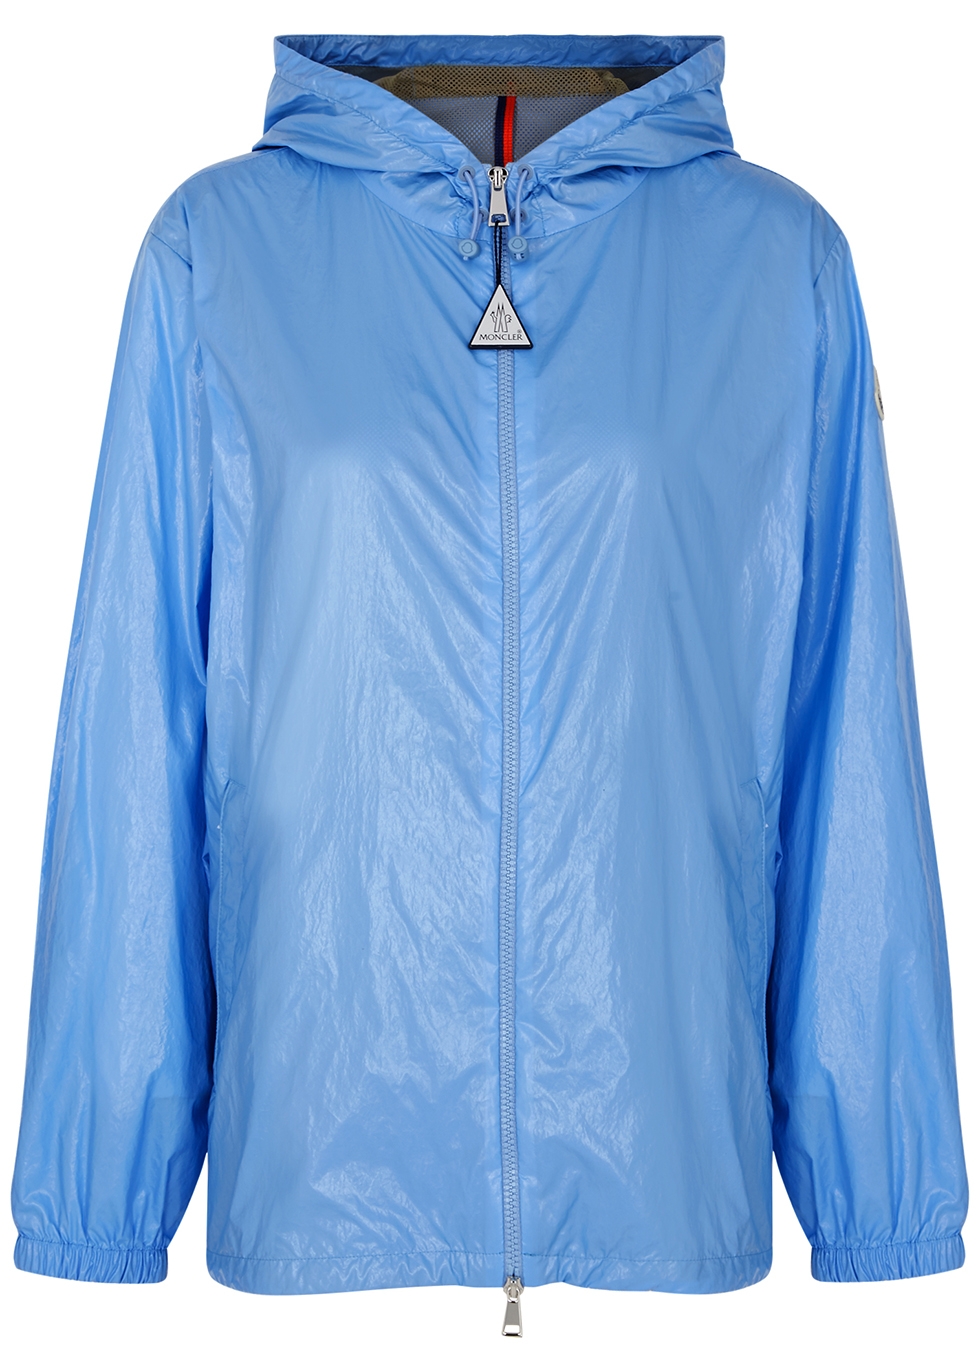 Wuisse coated cotton-blend jacket